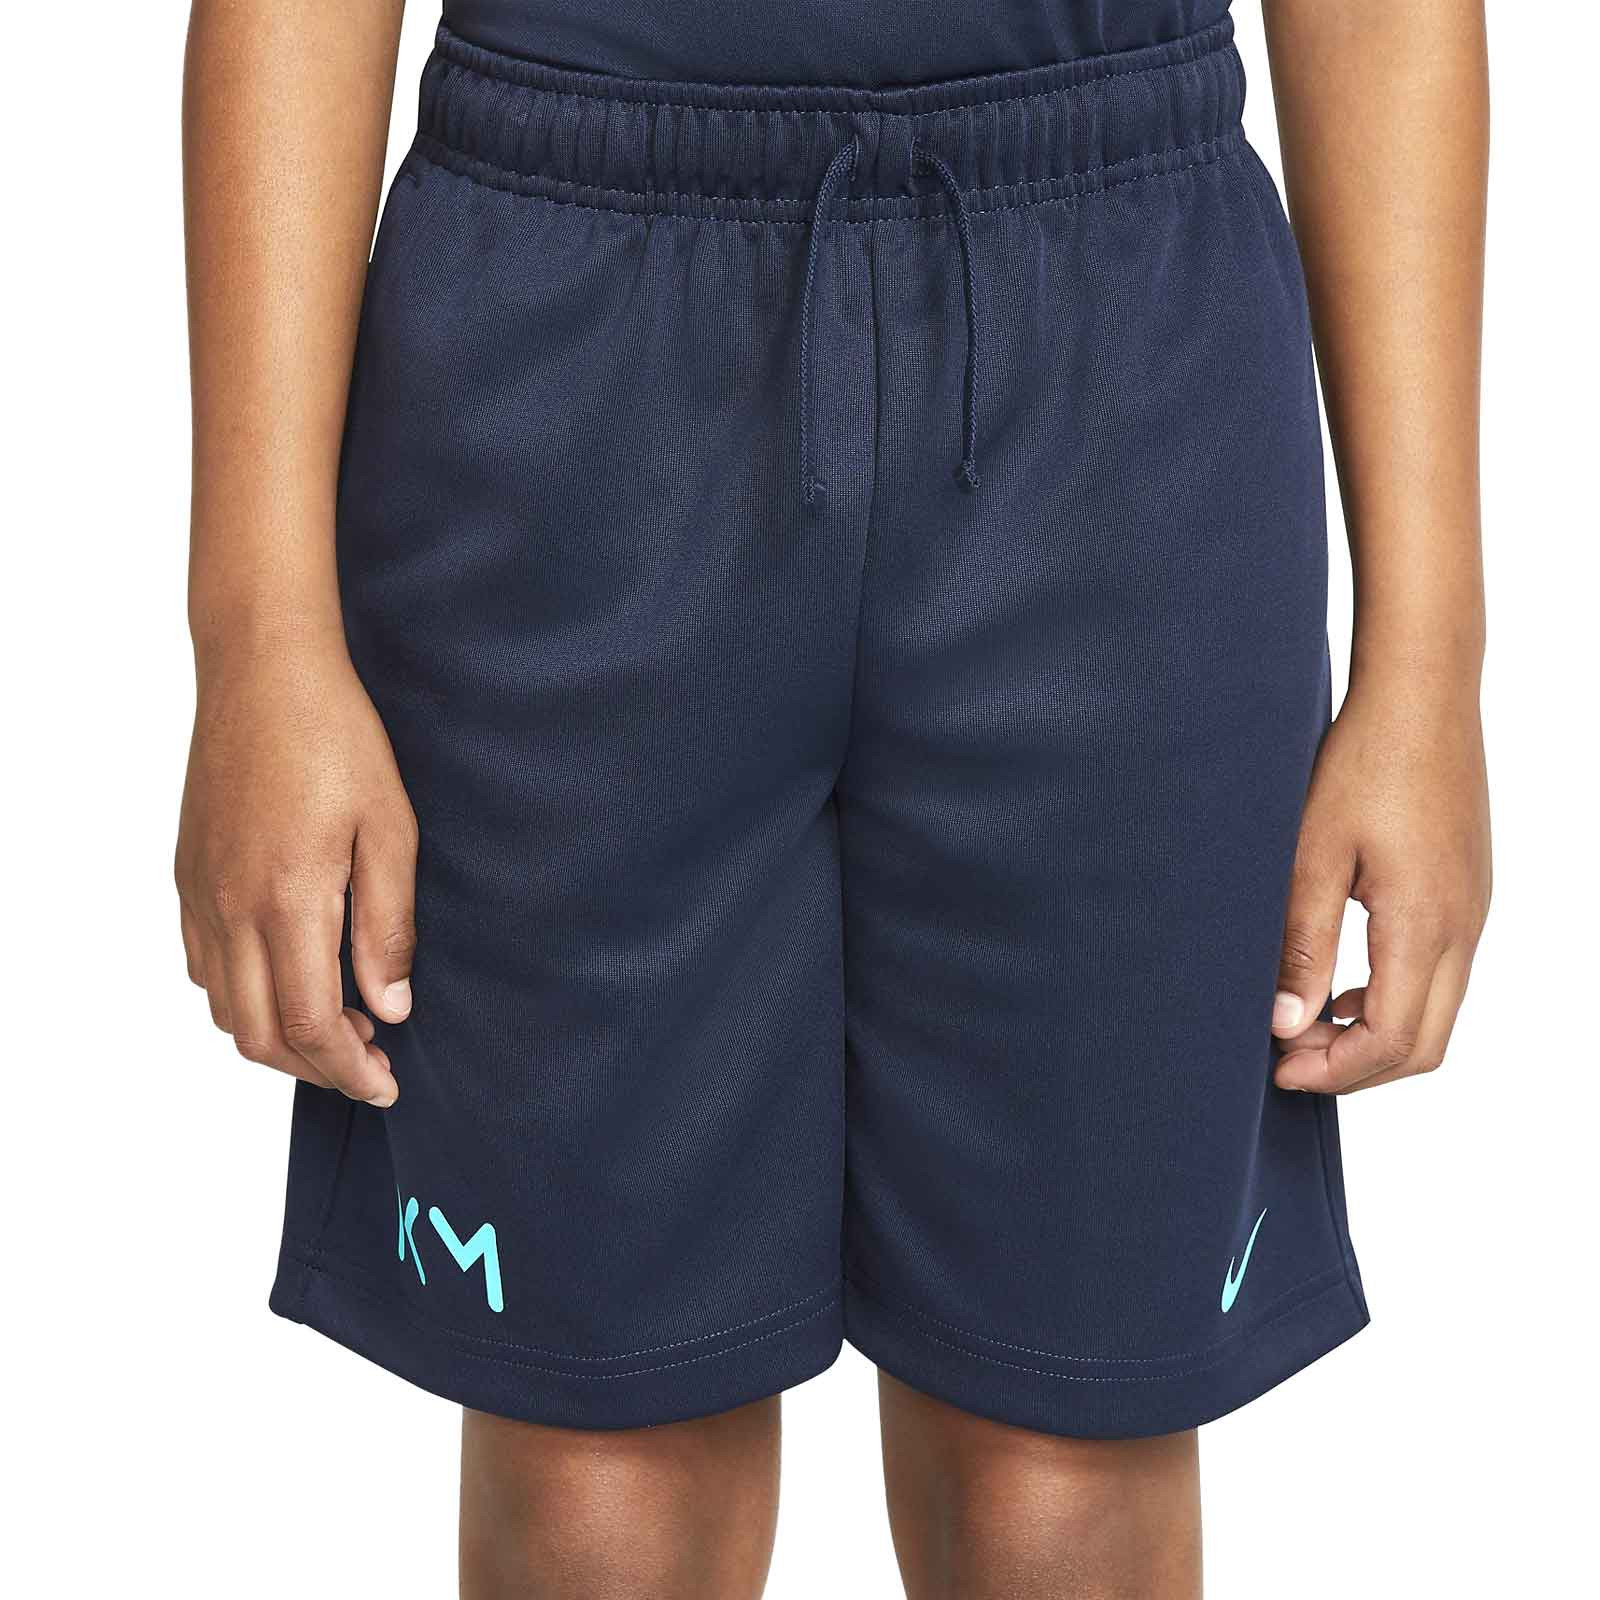 Short Nike niño Kylian Mbappé azul marino |futbolmaniaKids